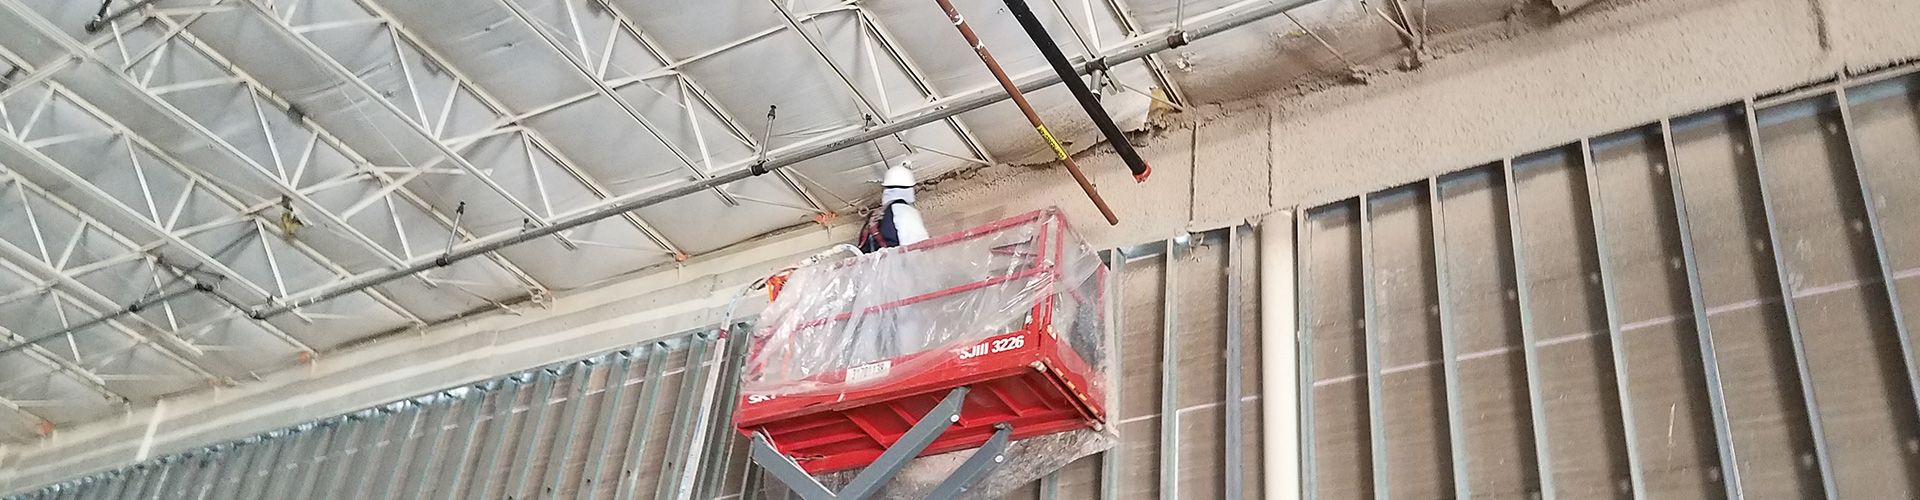 commercial spray foam insulation service